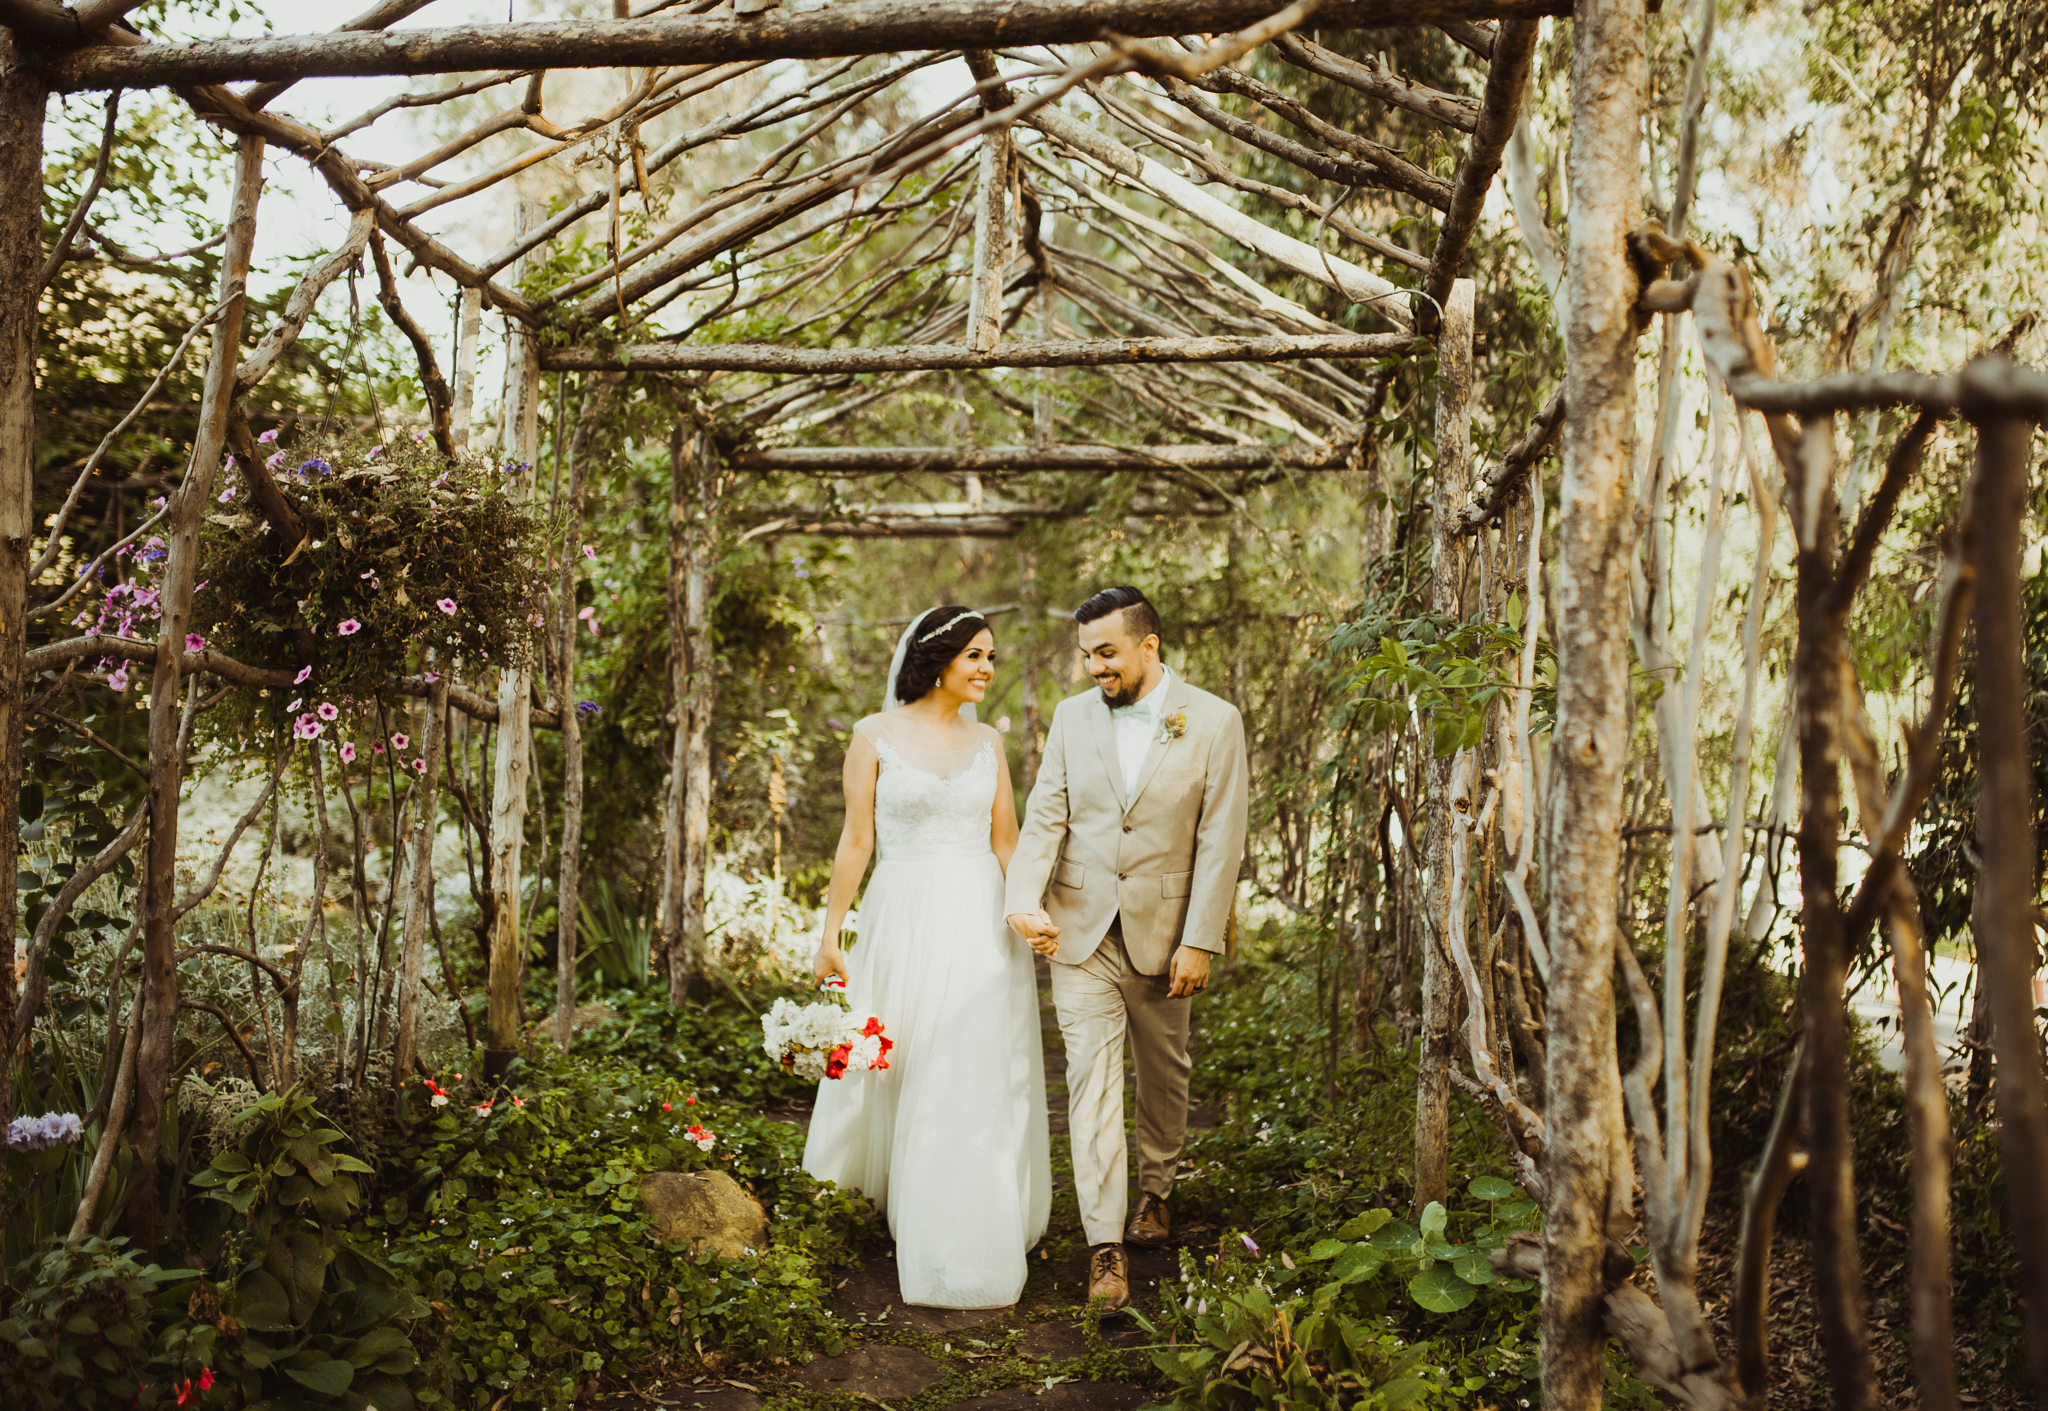 ©Isaiah + Taylor Photography - Brendan + Stefana, Quail Haven Farm Wedding, Vista-101.jpg